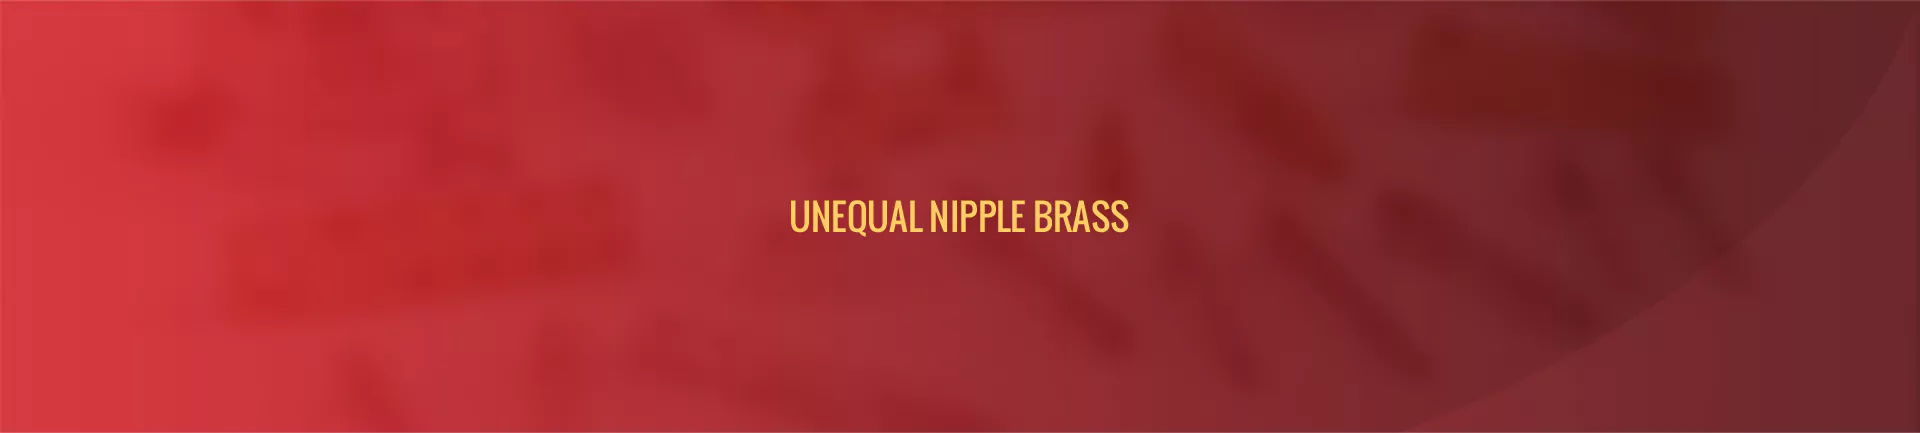 unequal_nipple_brass-banner